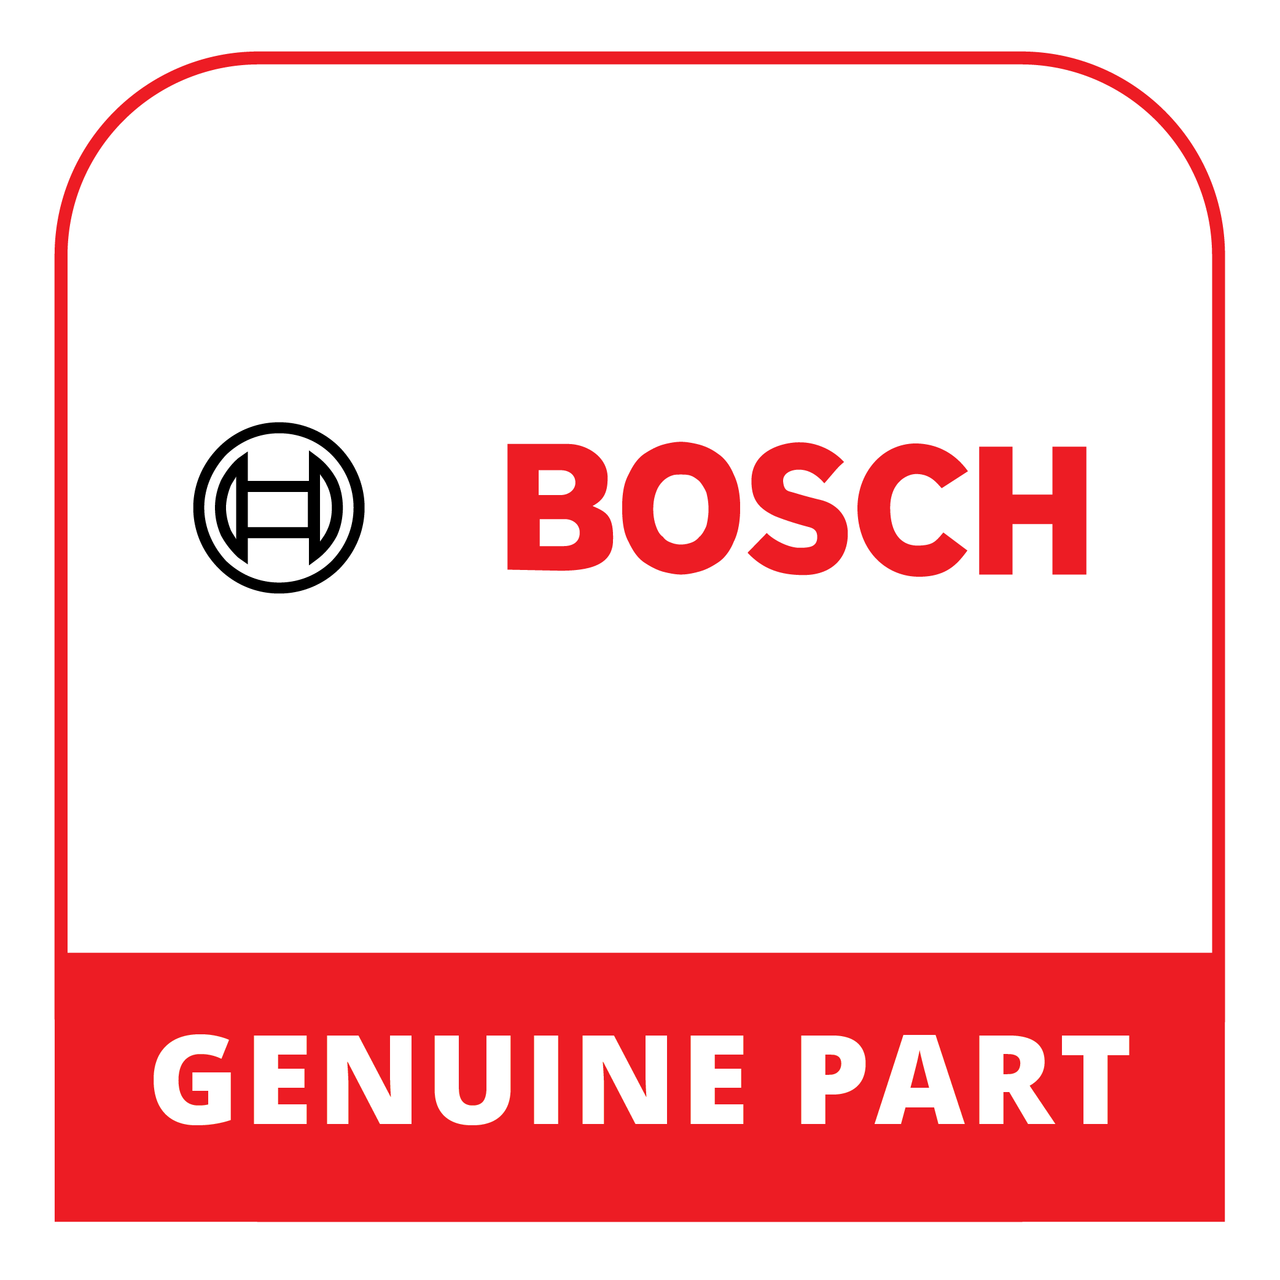 Bosch (Thermador) 12028941 - Shelf - Genuine Bosch (Thermador) Part